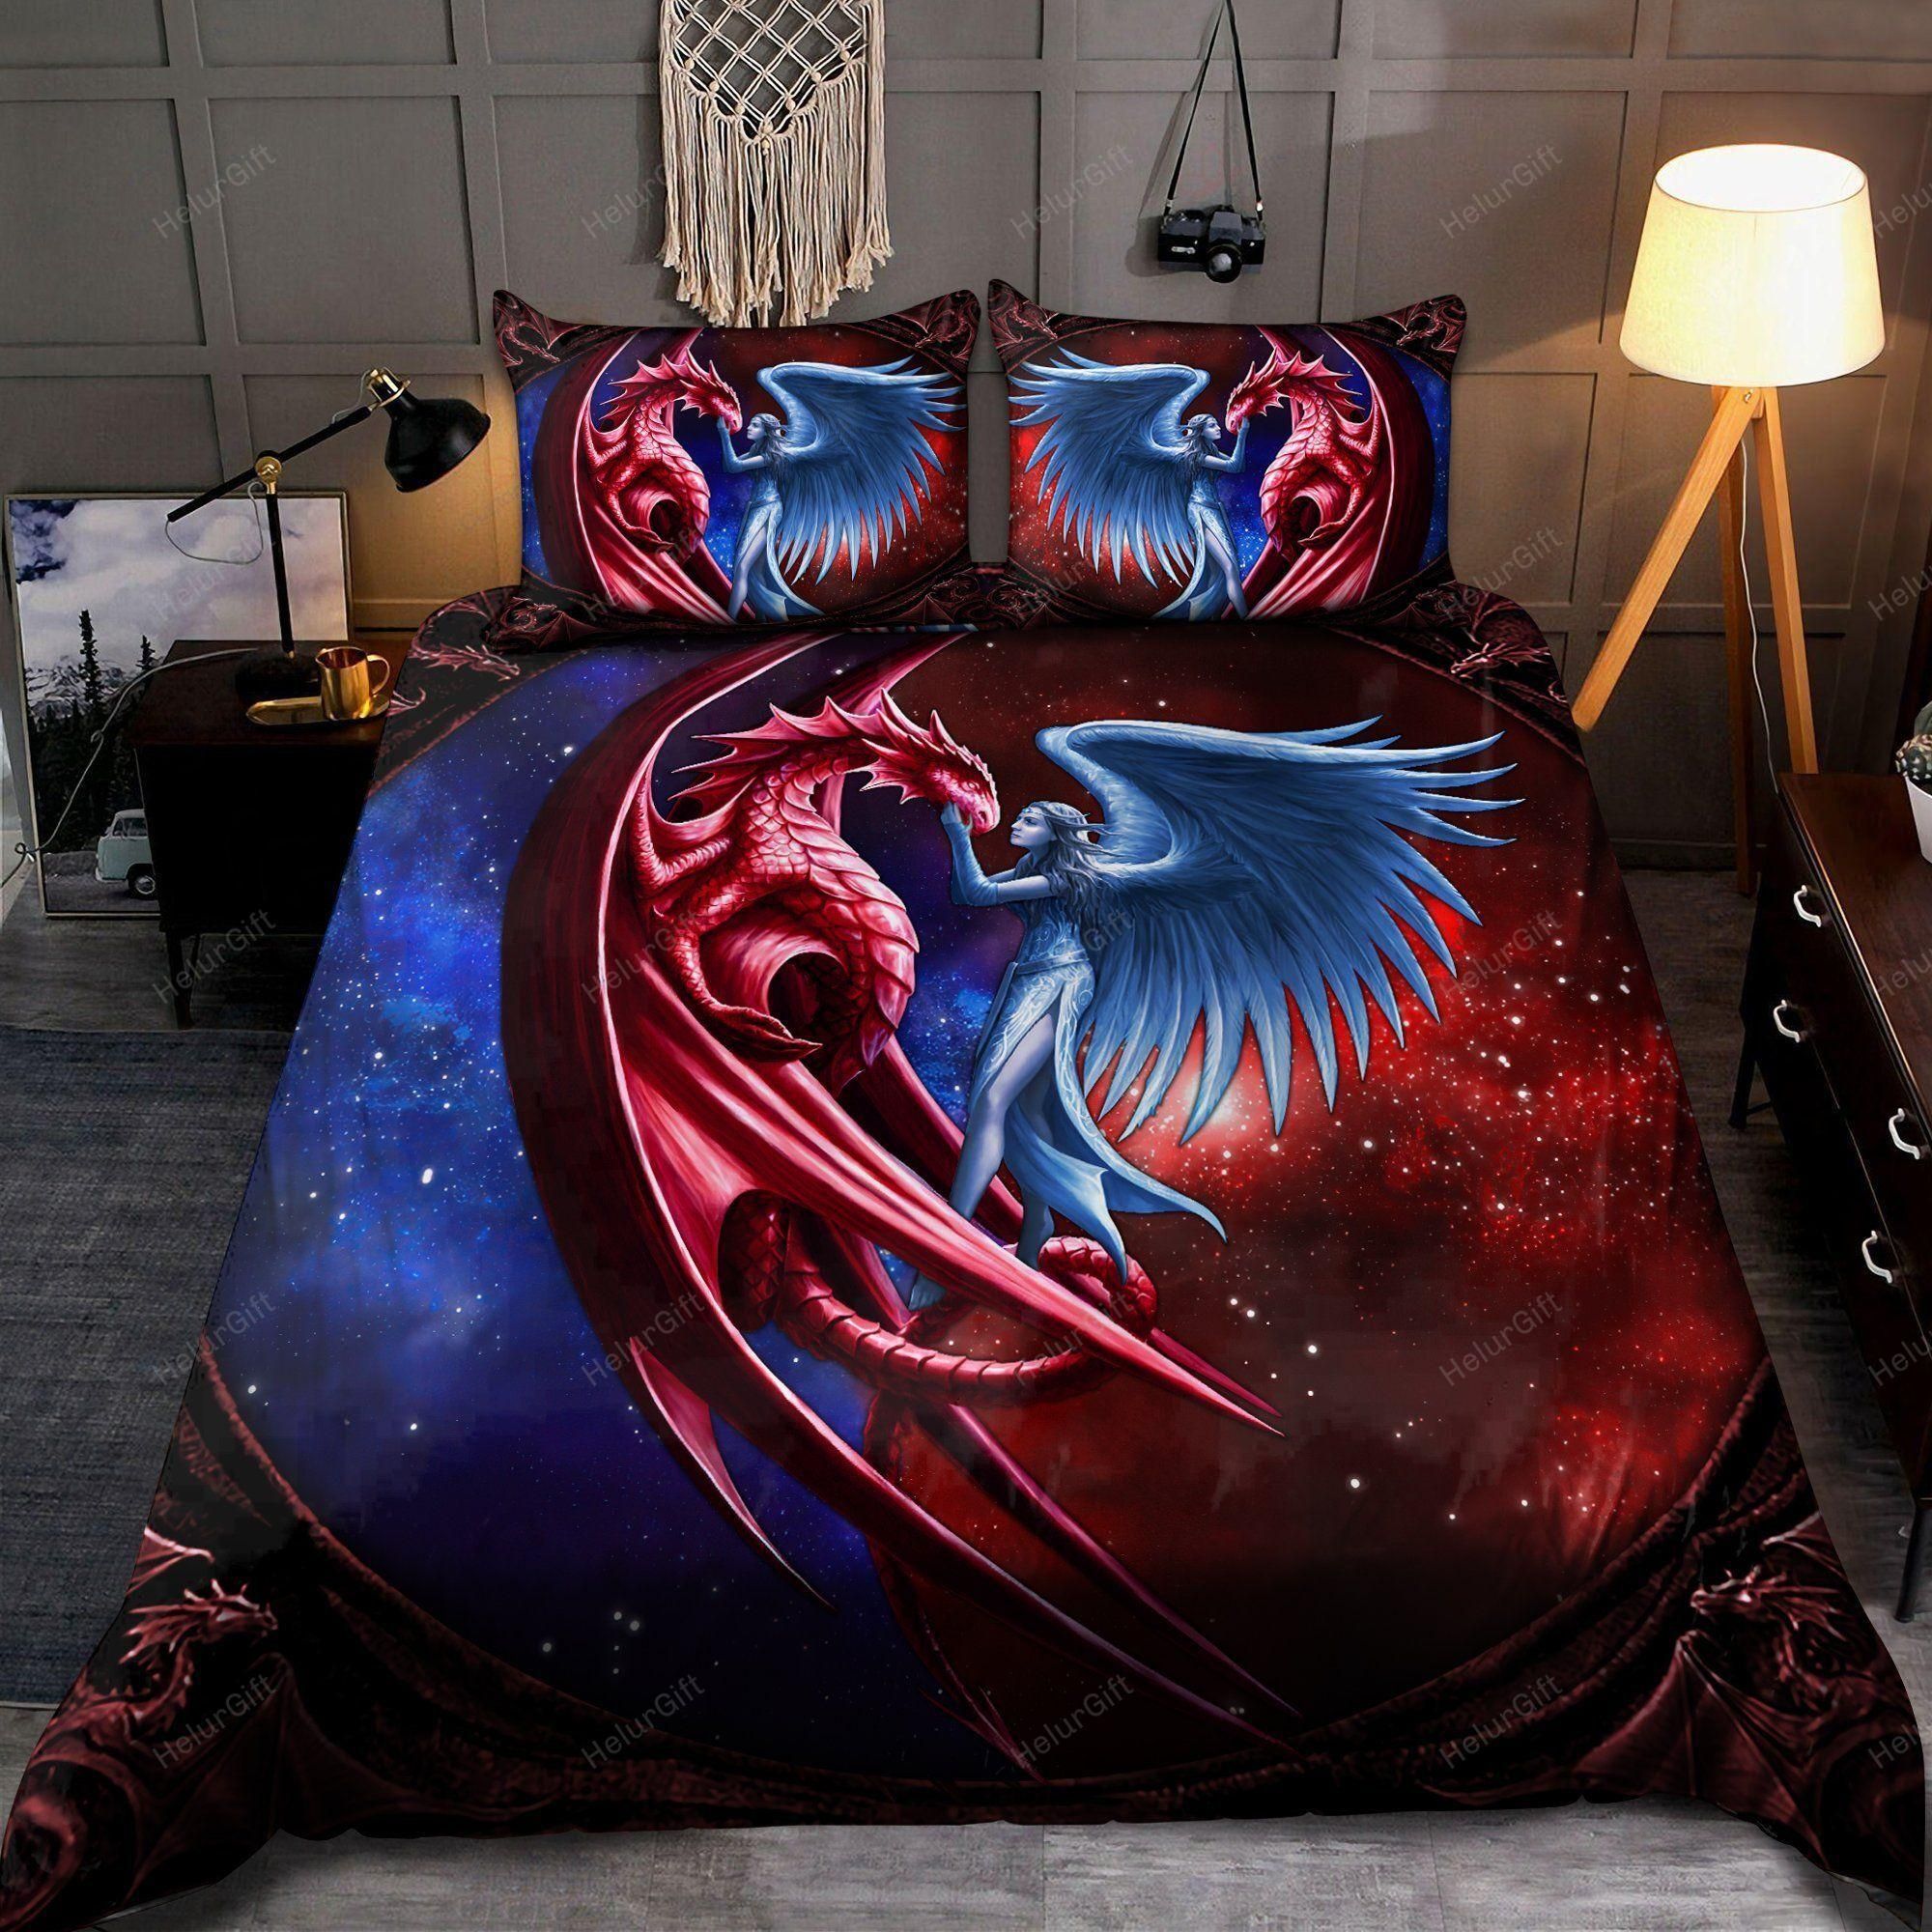 Dragon bedding set